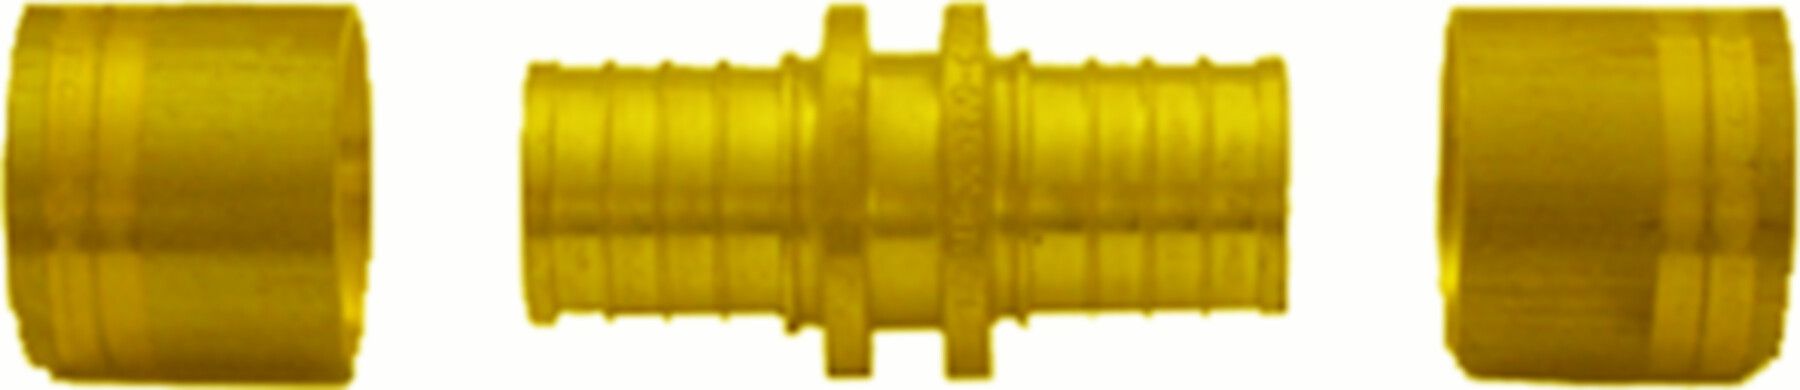 Press-Verbindungskupplung PVK H - 75 ø 75/6.8 mm - Isopex Fernwärmeleitung